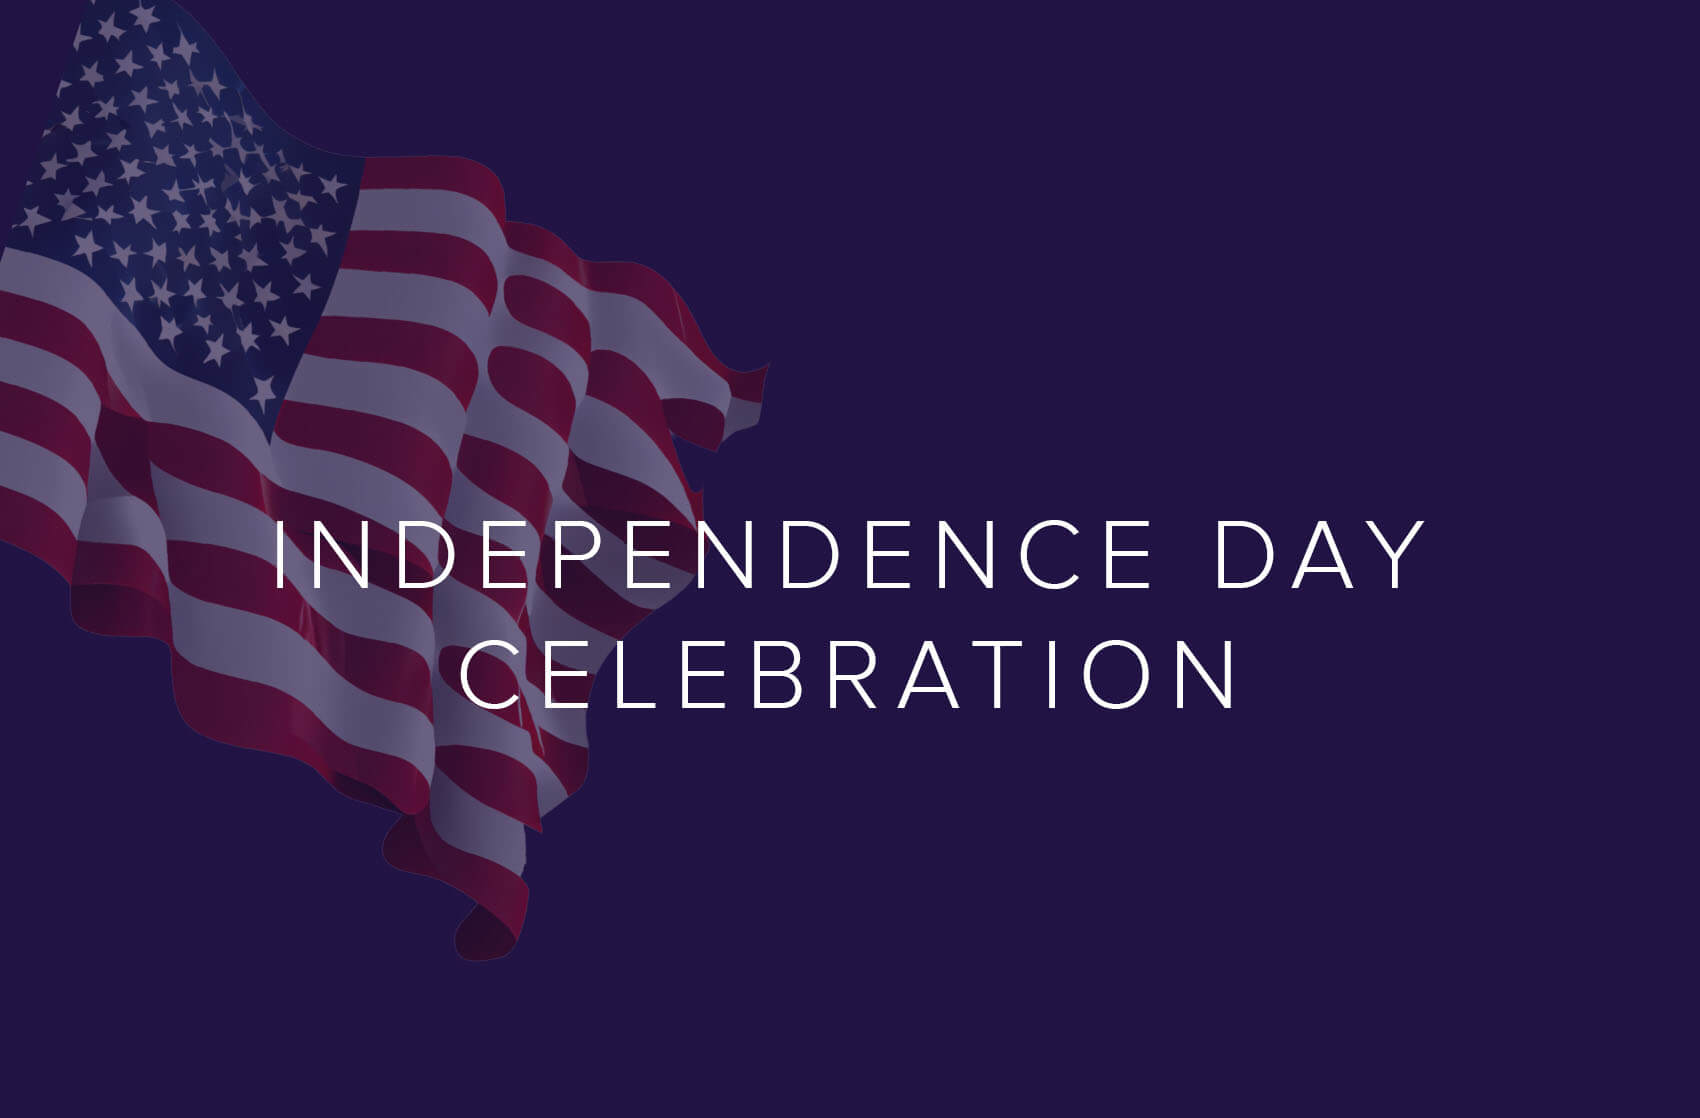 4th of July Calendar Image - "Independence Day Celebration"